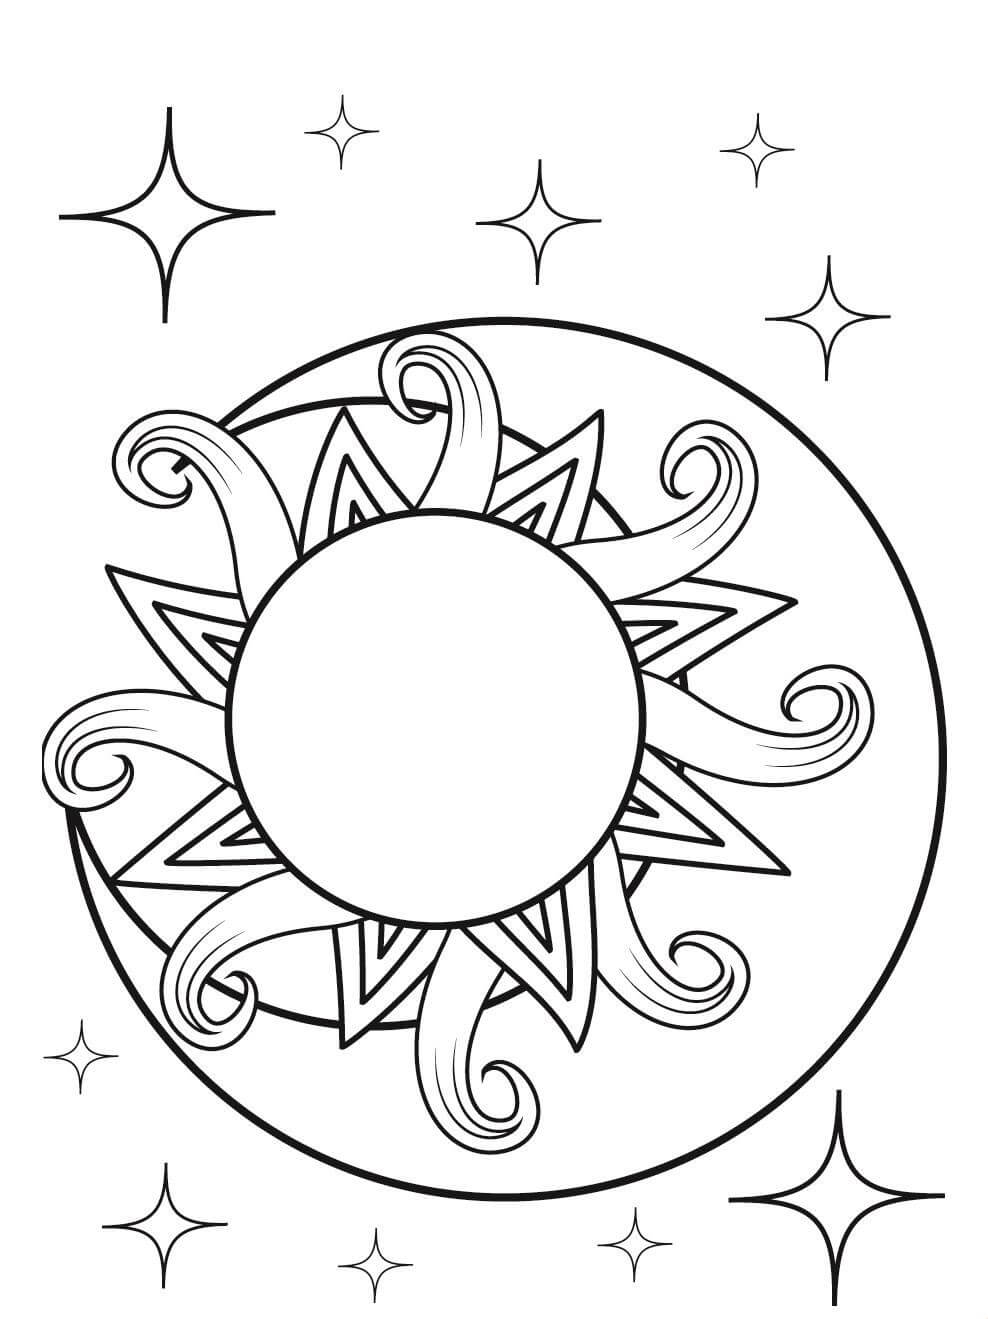 Mandala Explore The World of Creativity With Sun and Moon Coloring Page Mandalas